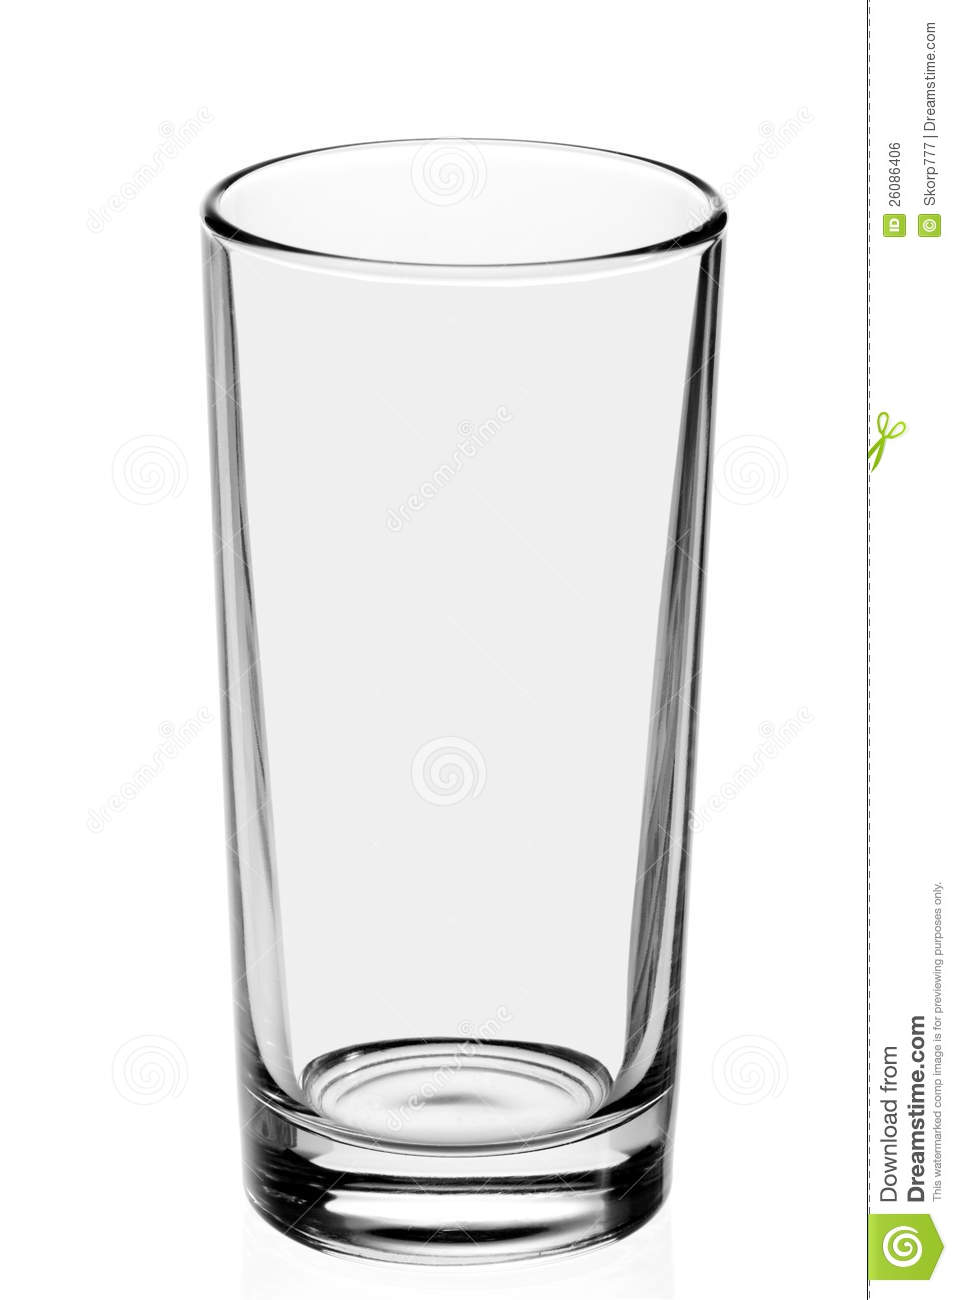 Empty glass the.